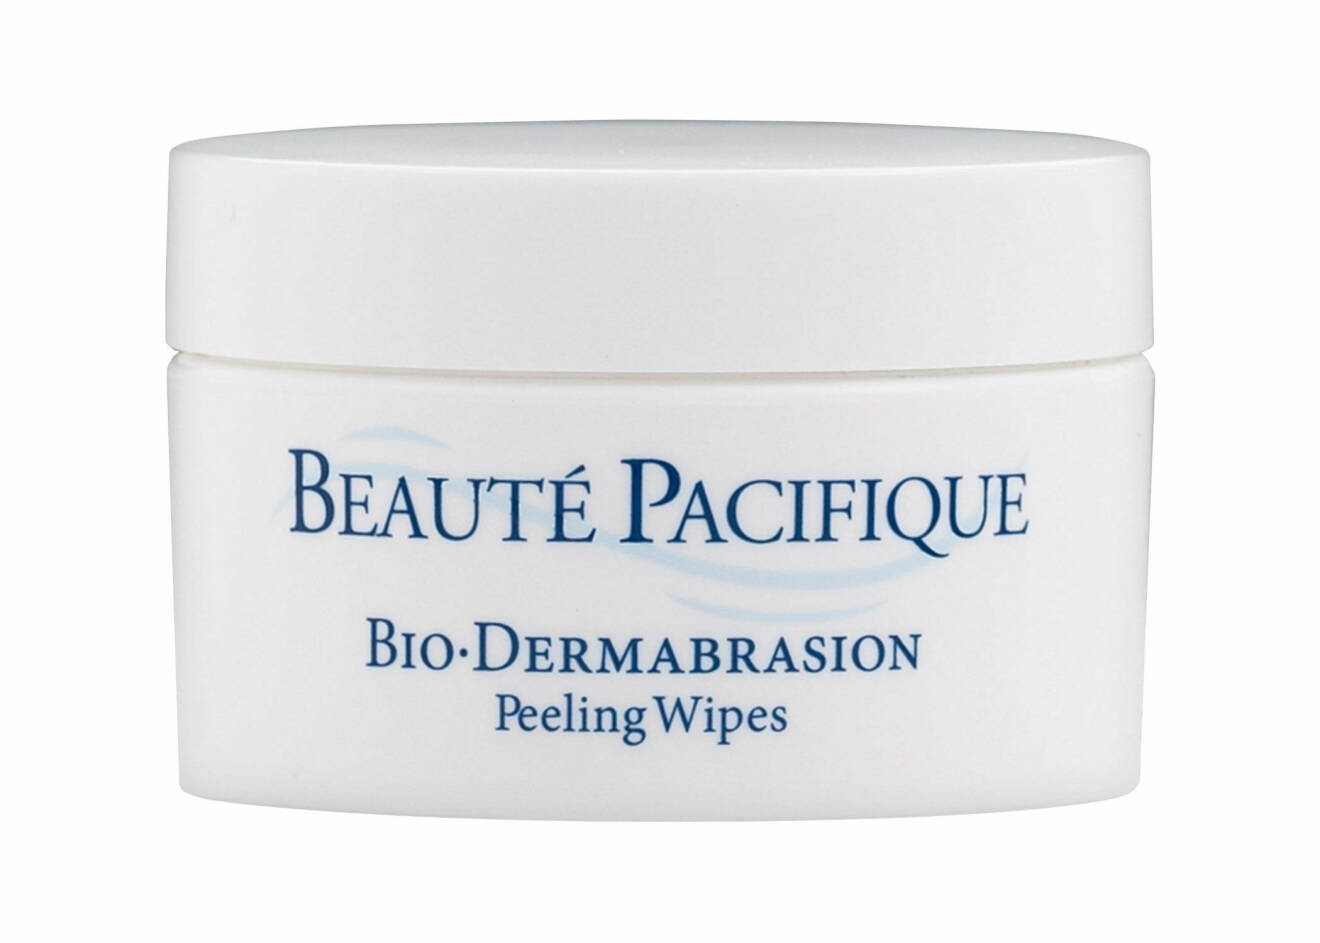 Bio-Dermabrasion Peeling Wipes från Beauté Pacifique.